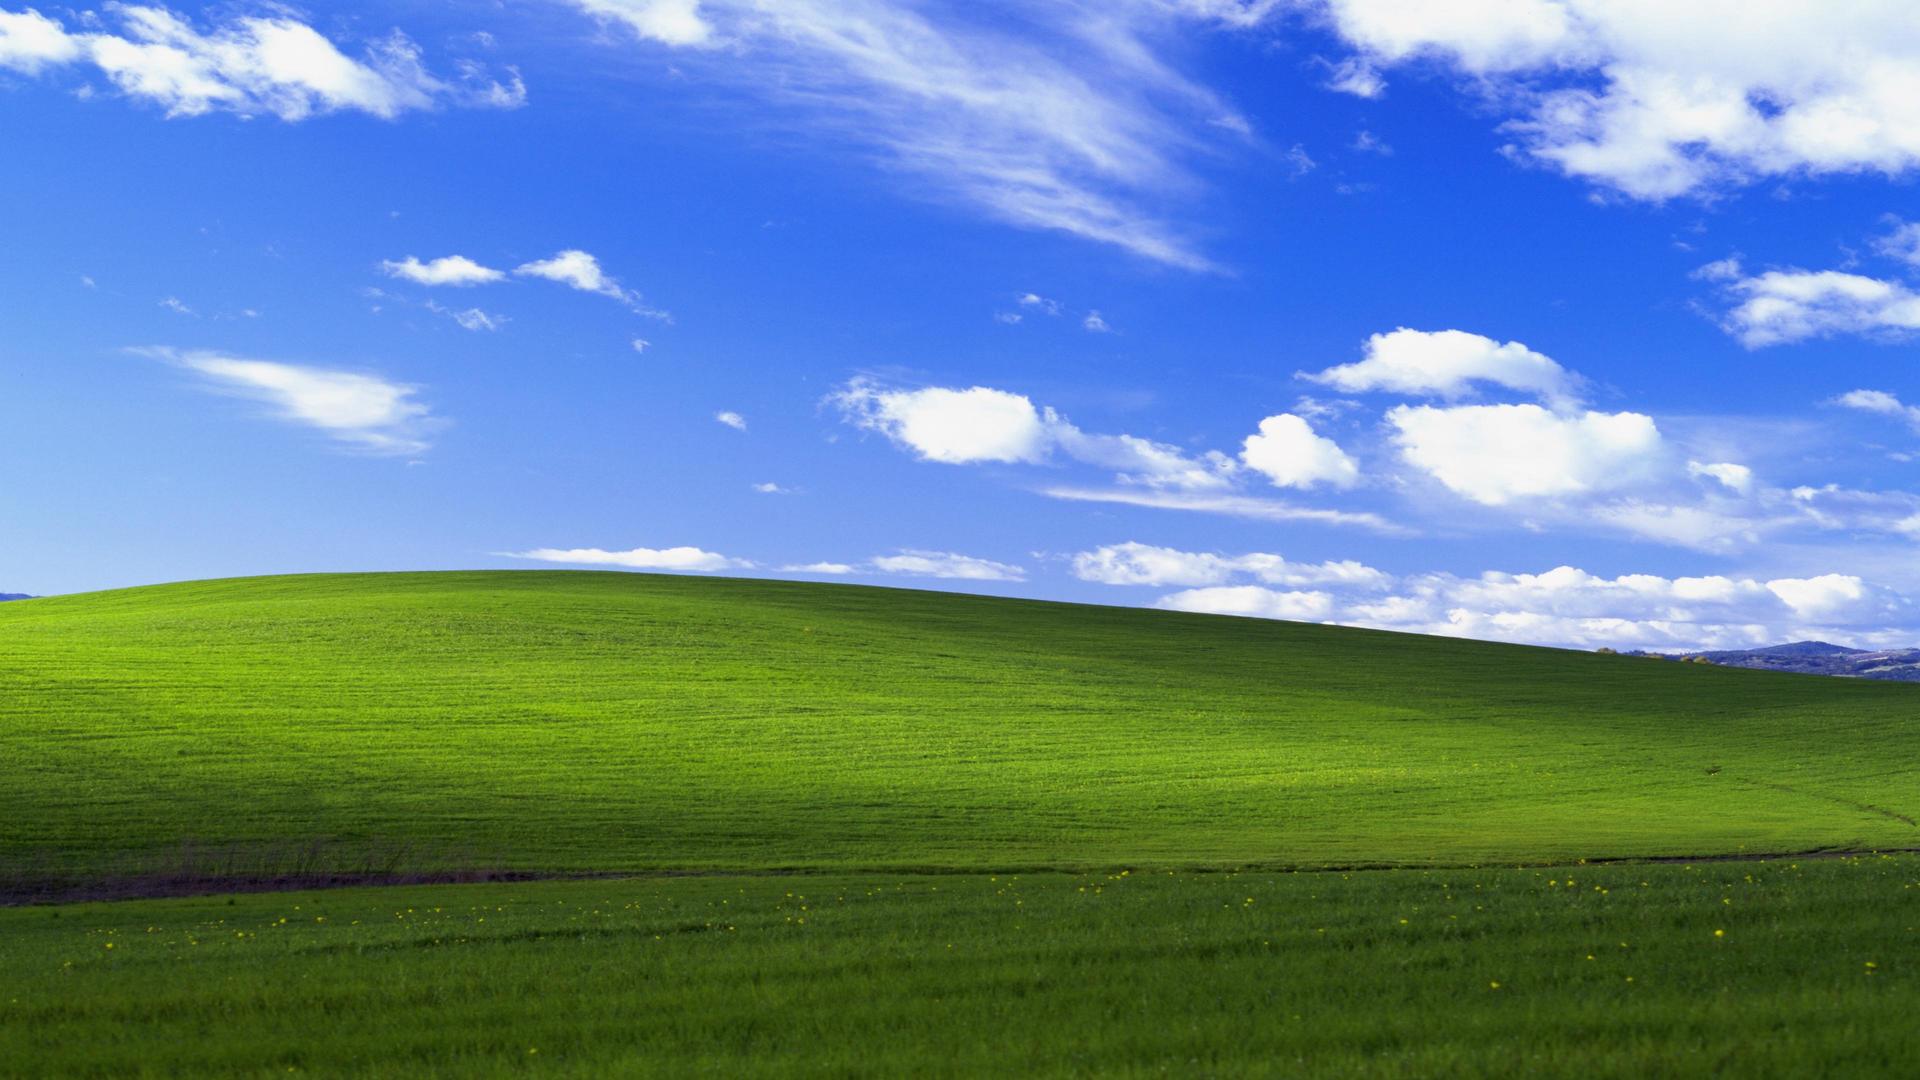 Windows XP desktop backgroundbut in Anime? by LUVUS-7 on DeviantArt